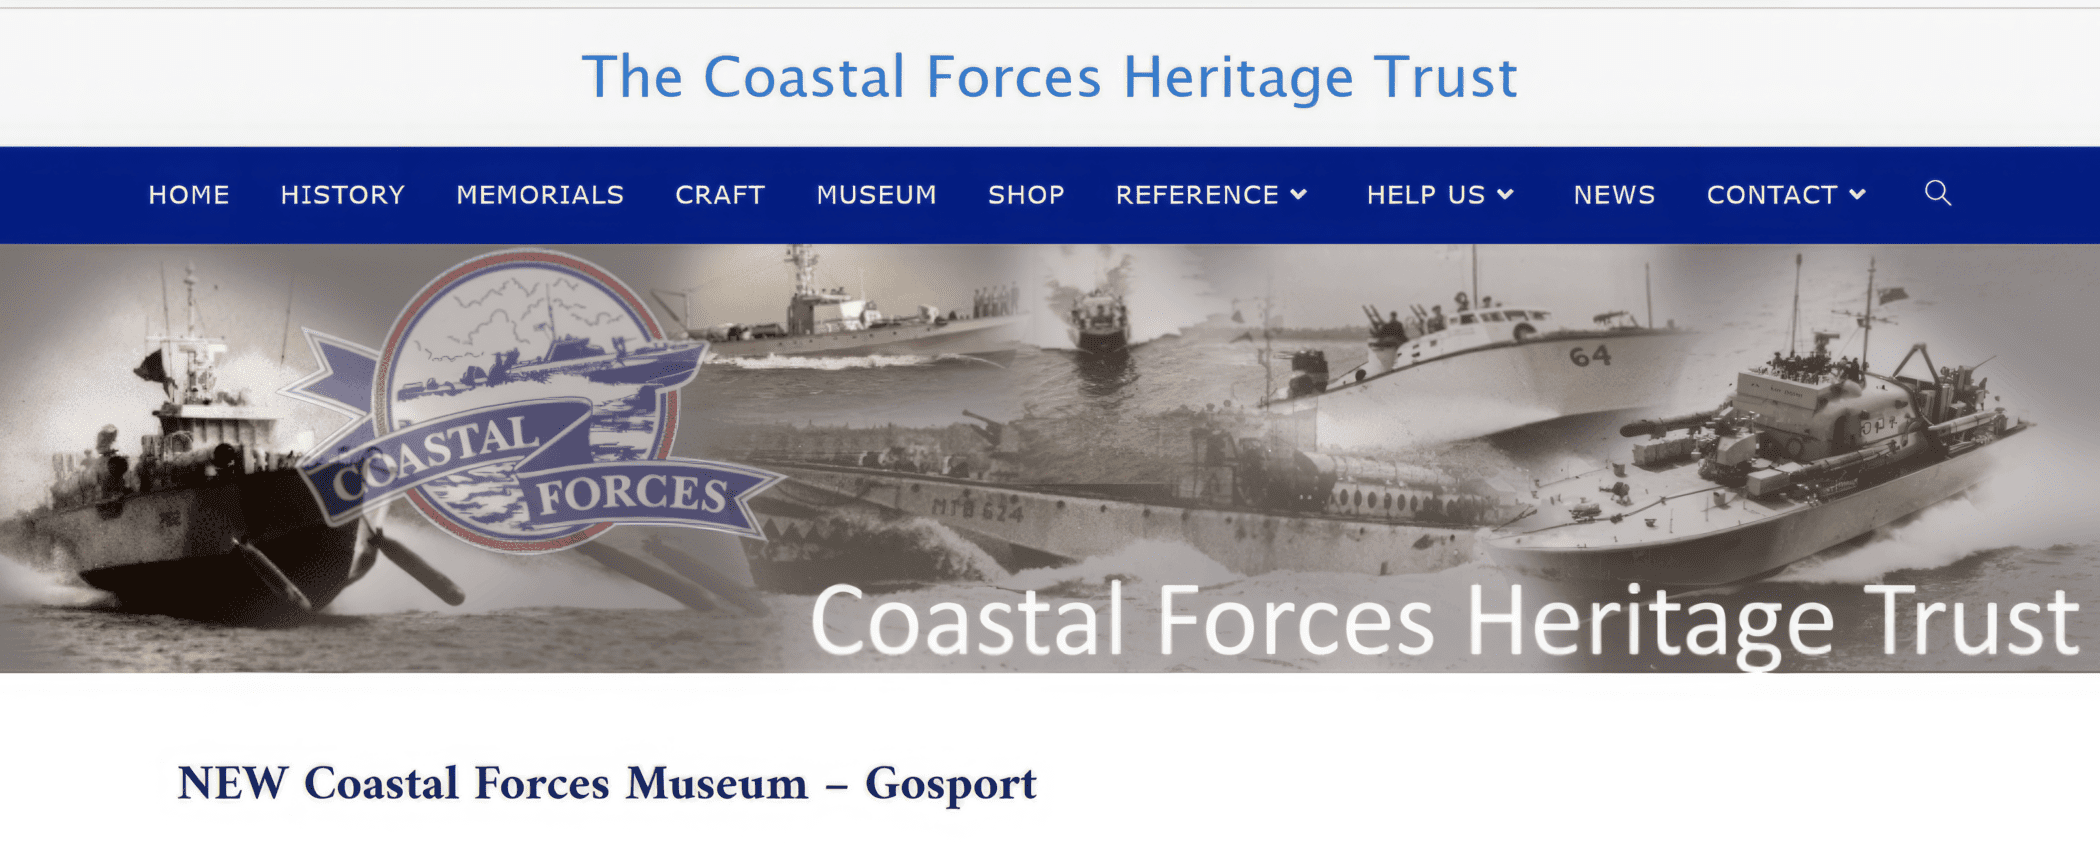 coastal-forces-heritage-trust-and-coastal-forces-museum-gosport-topaz-enhance-3-7x